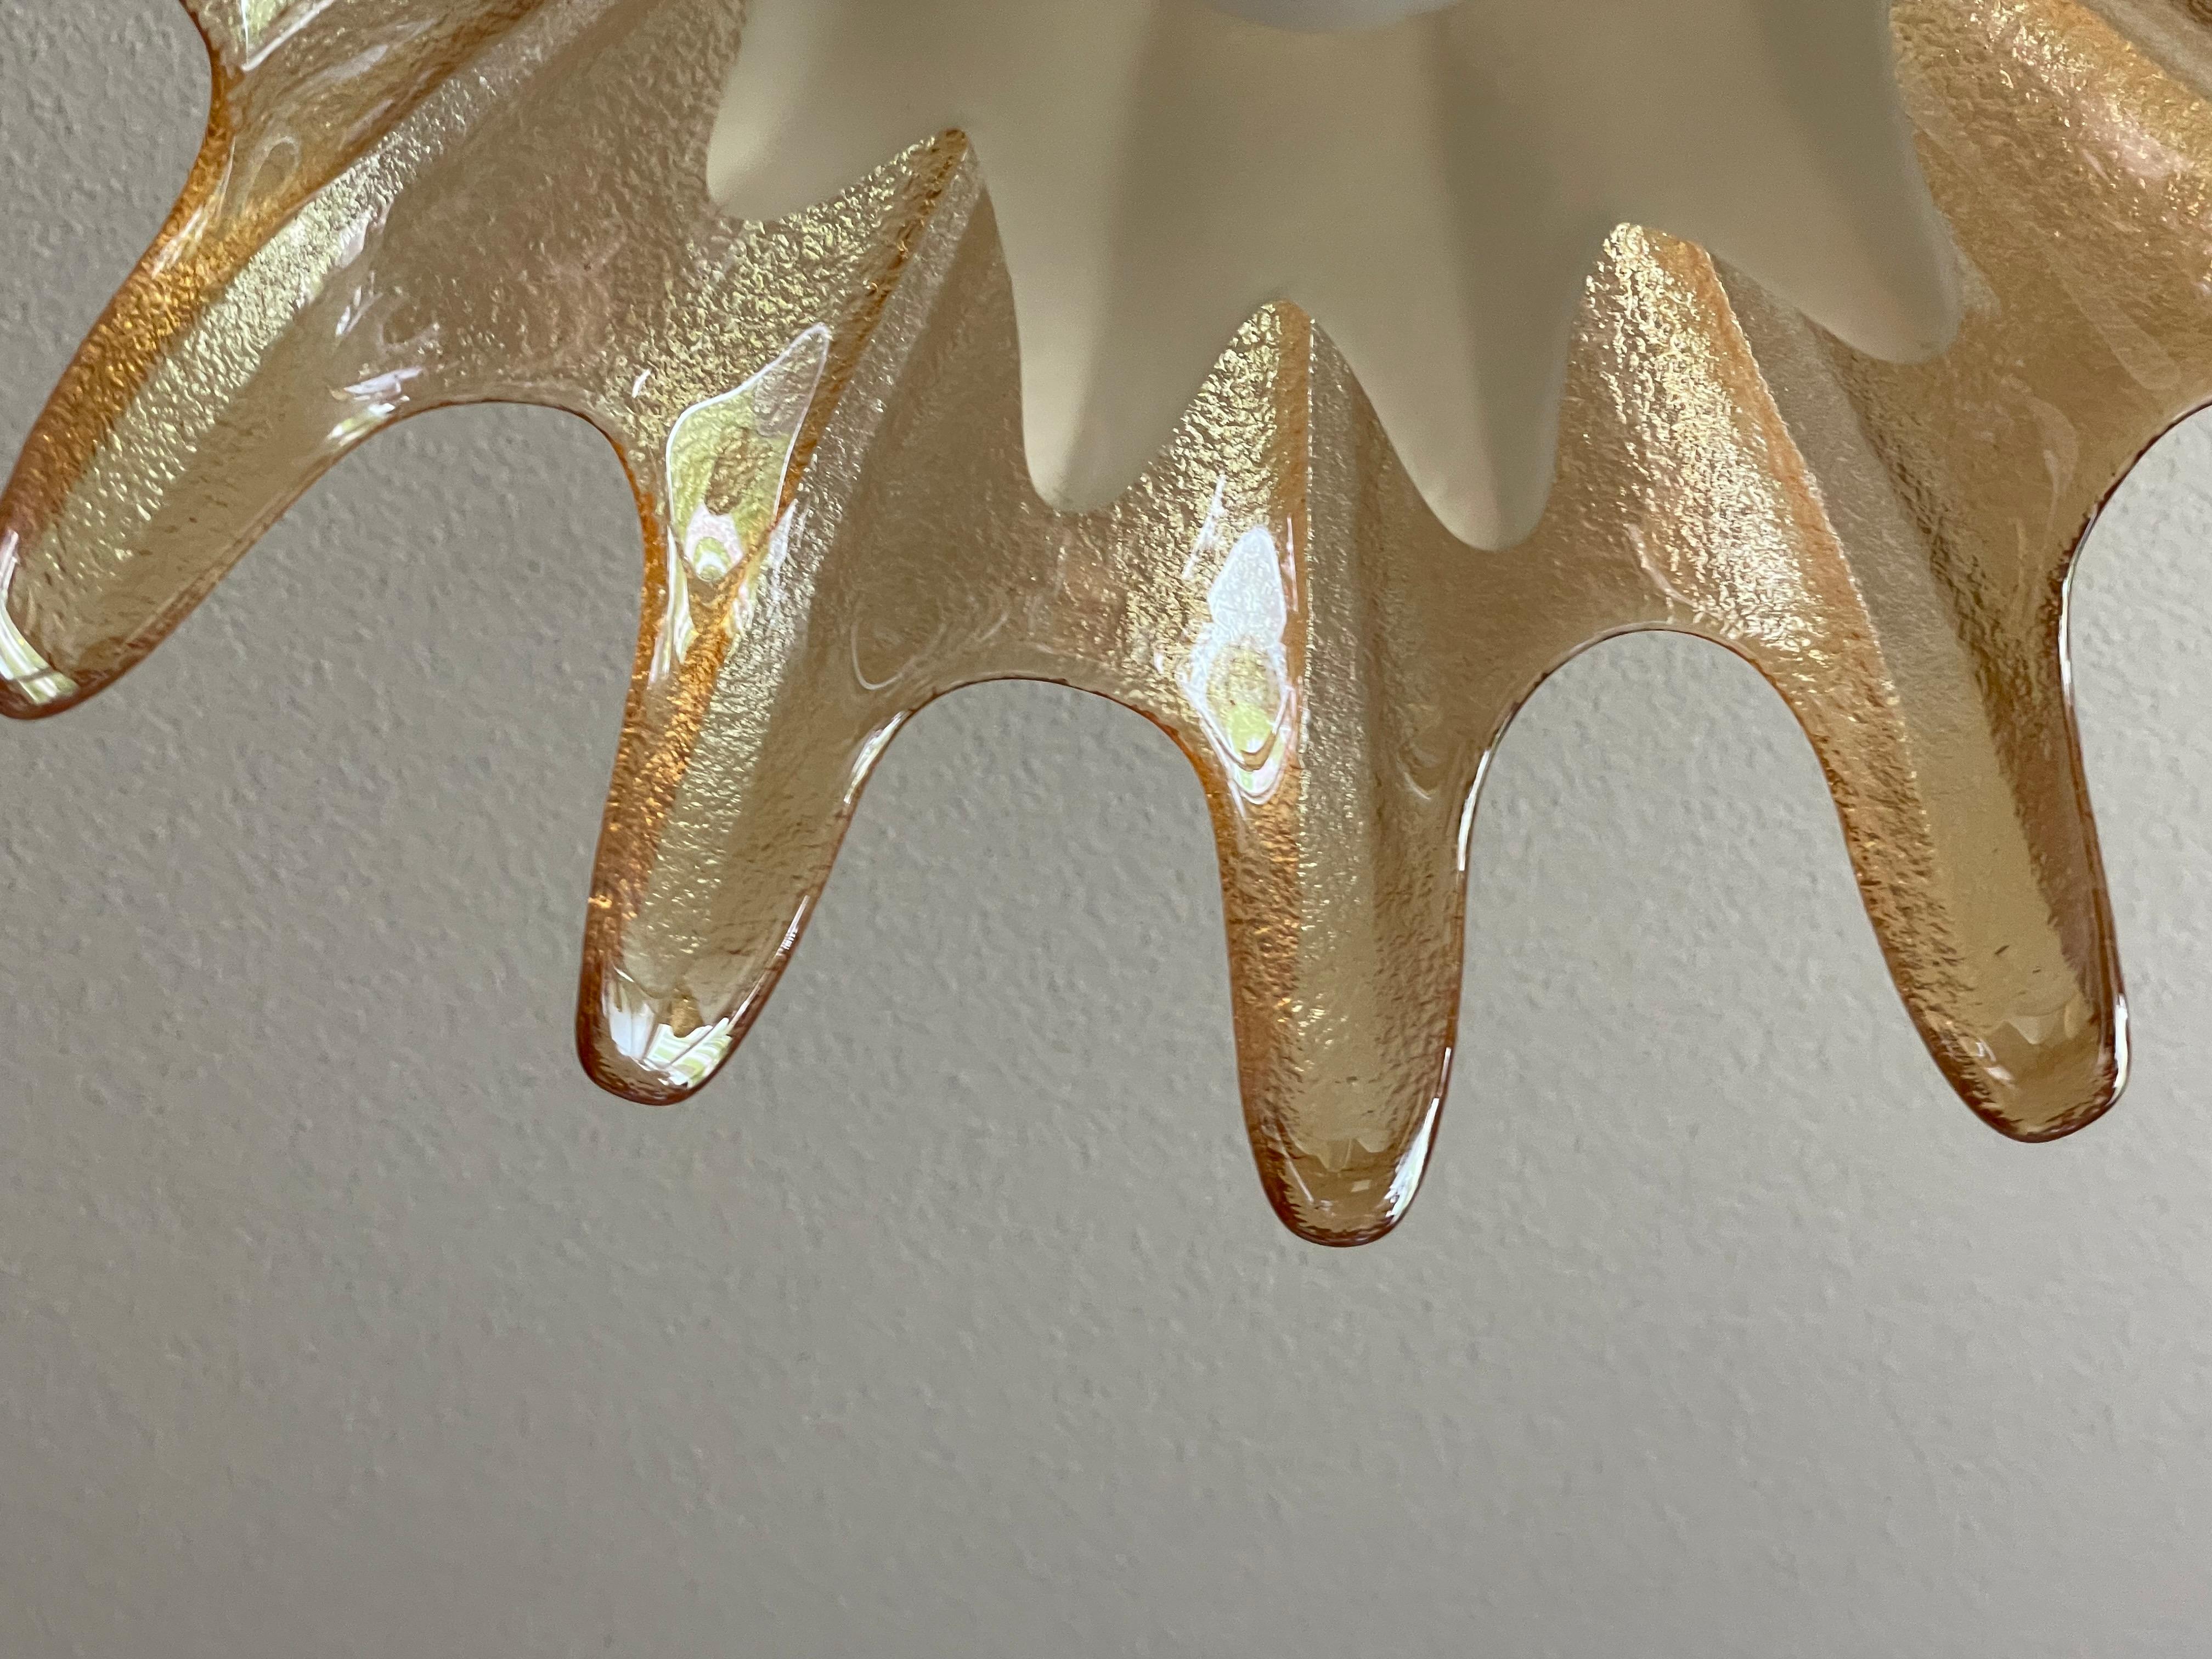 Mouth Blown Midcentury Murano Glass Pendant Attributed to Seguso Vetri d'Arte For Sale 2